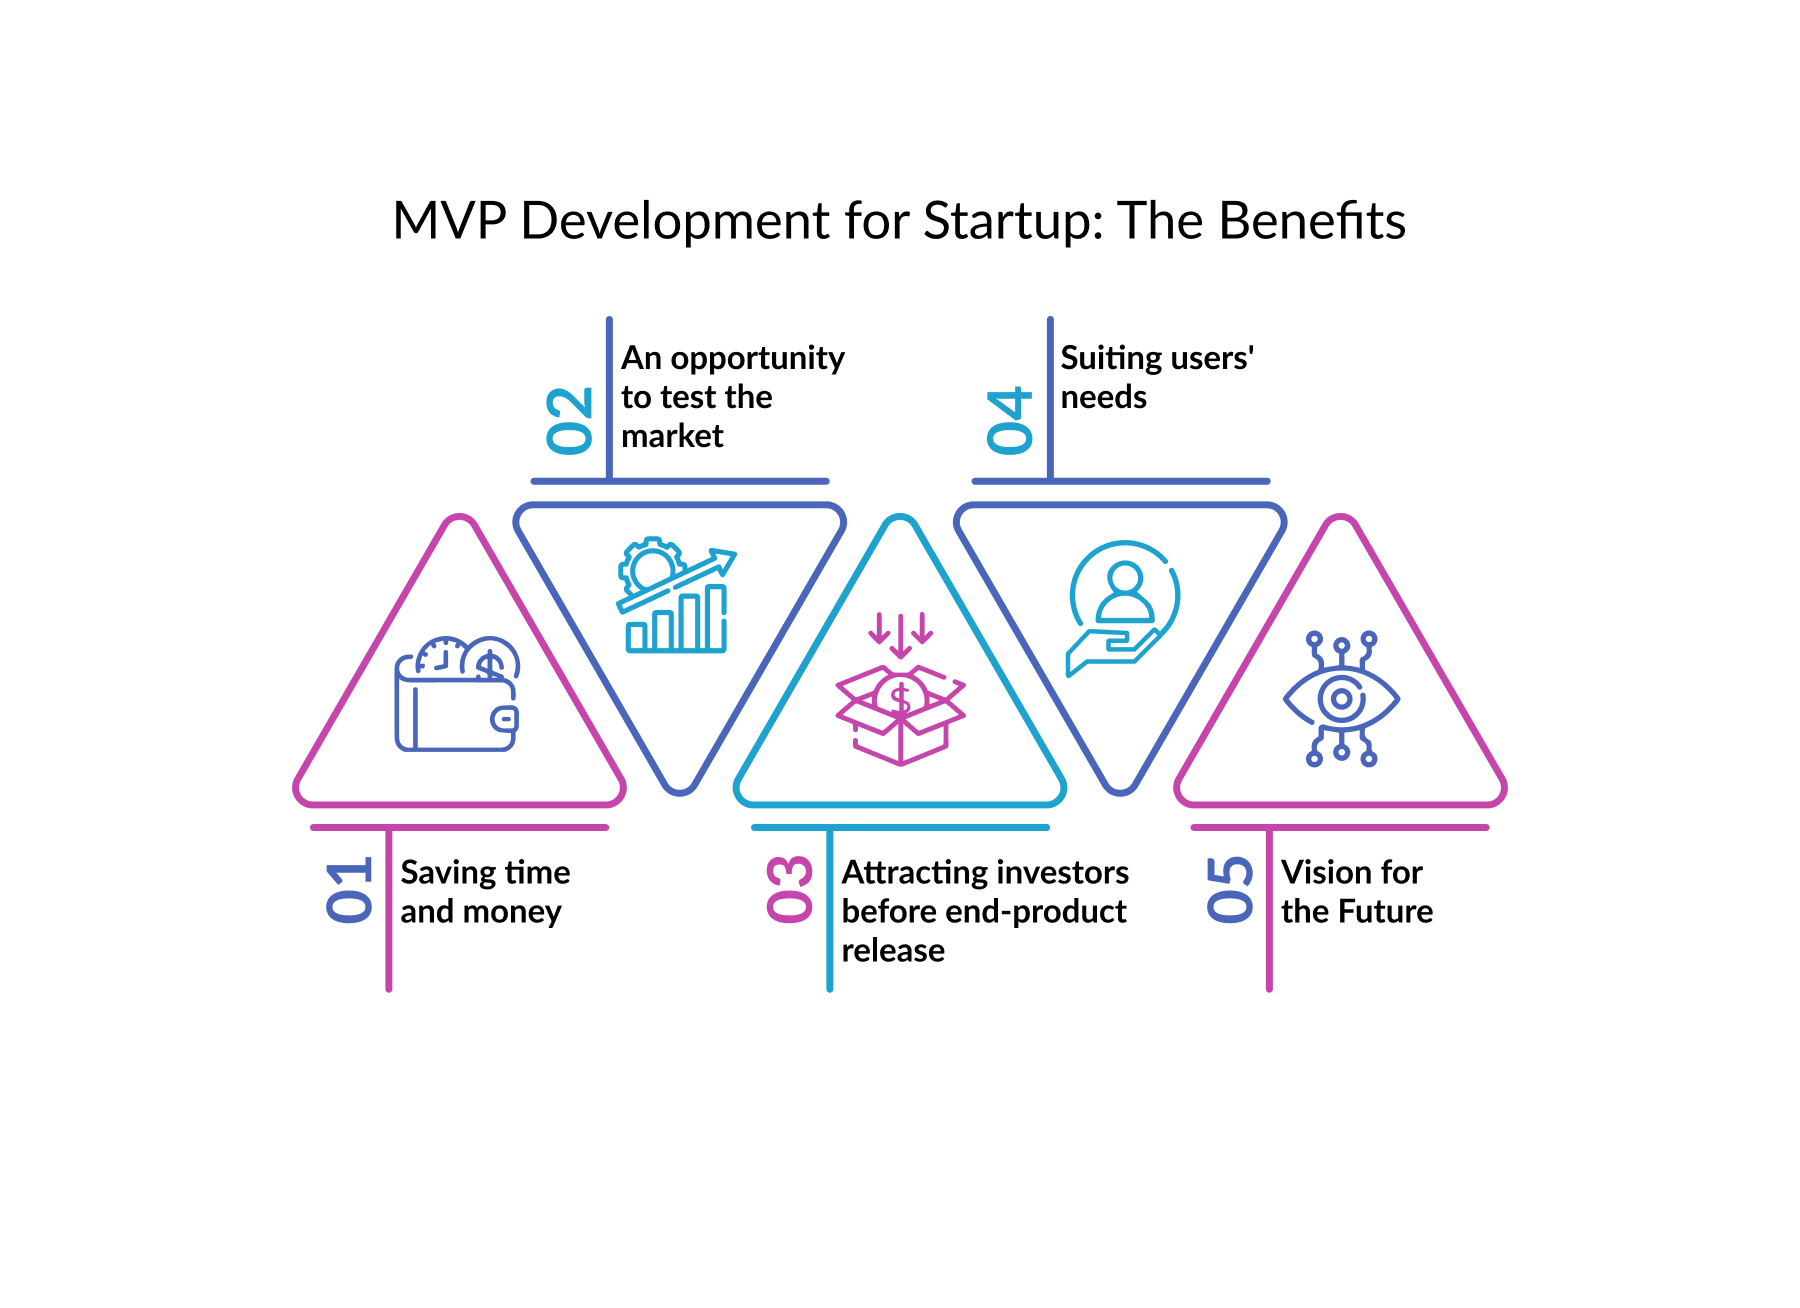 mvp development for startup benefits